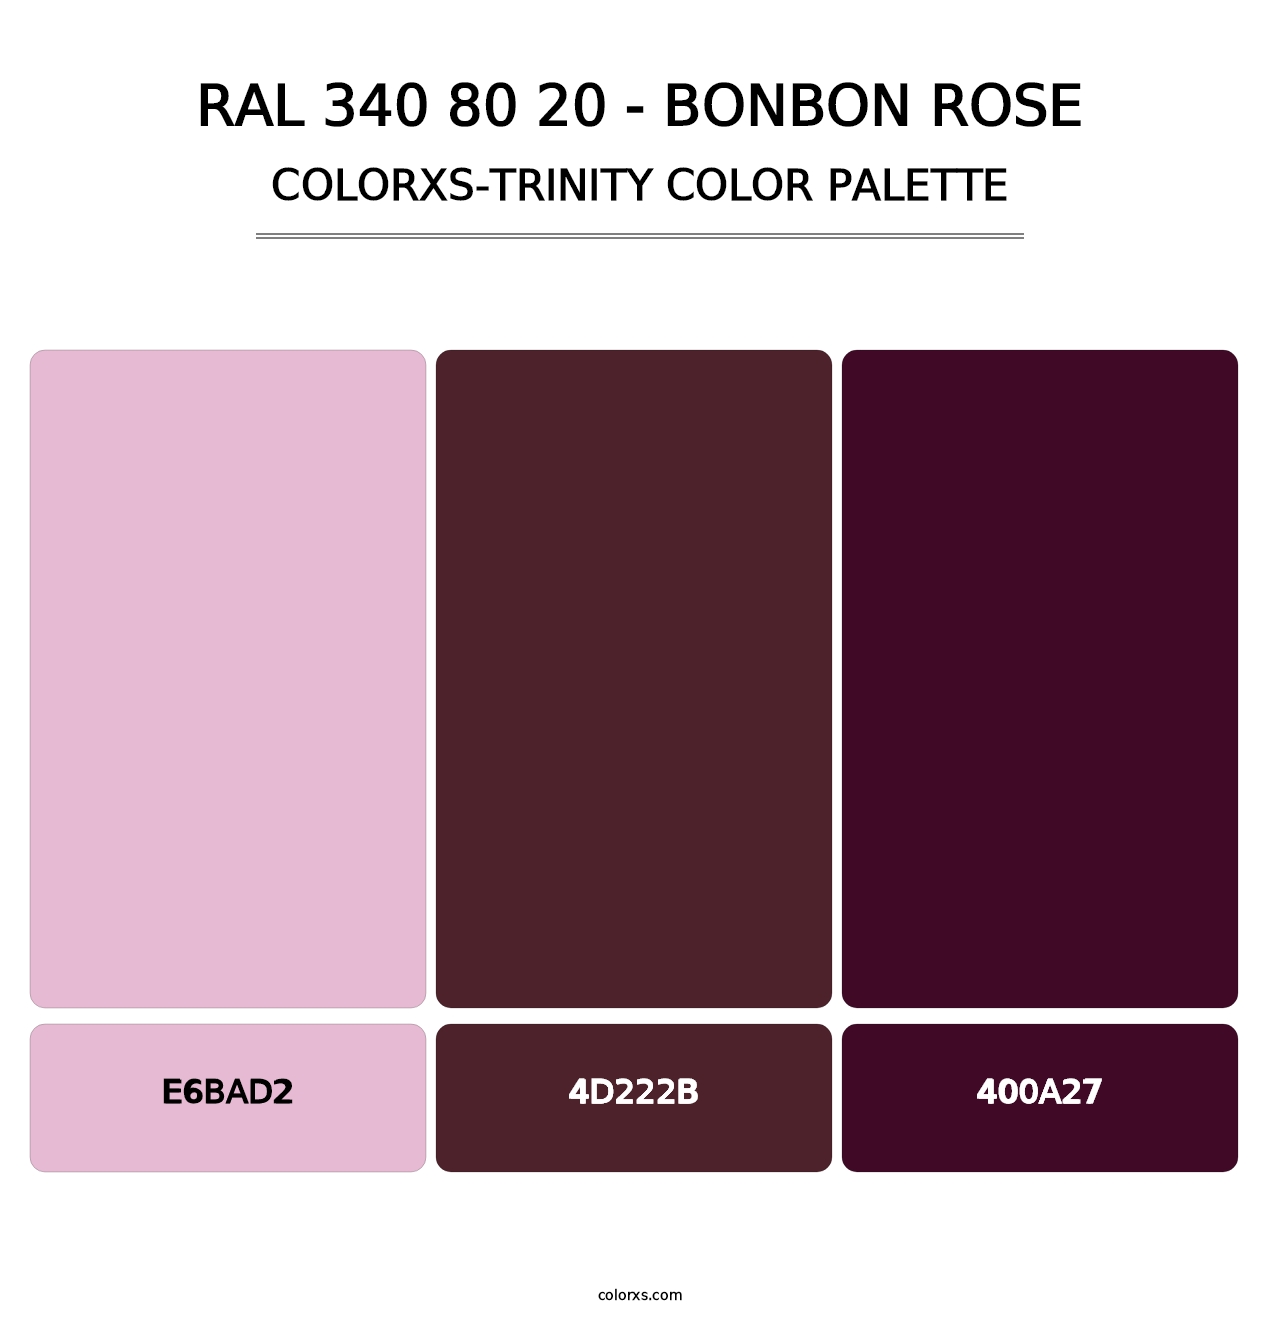 RAL 340 80 20 - Bonbon Rose - Colorxs Trinity Palette